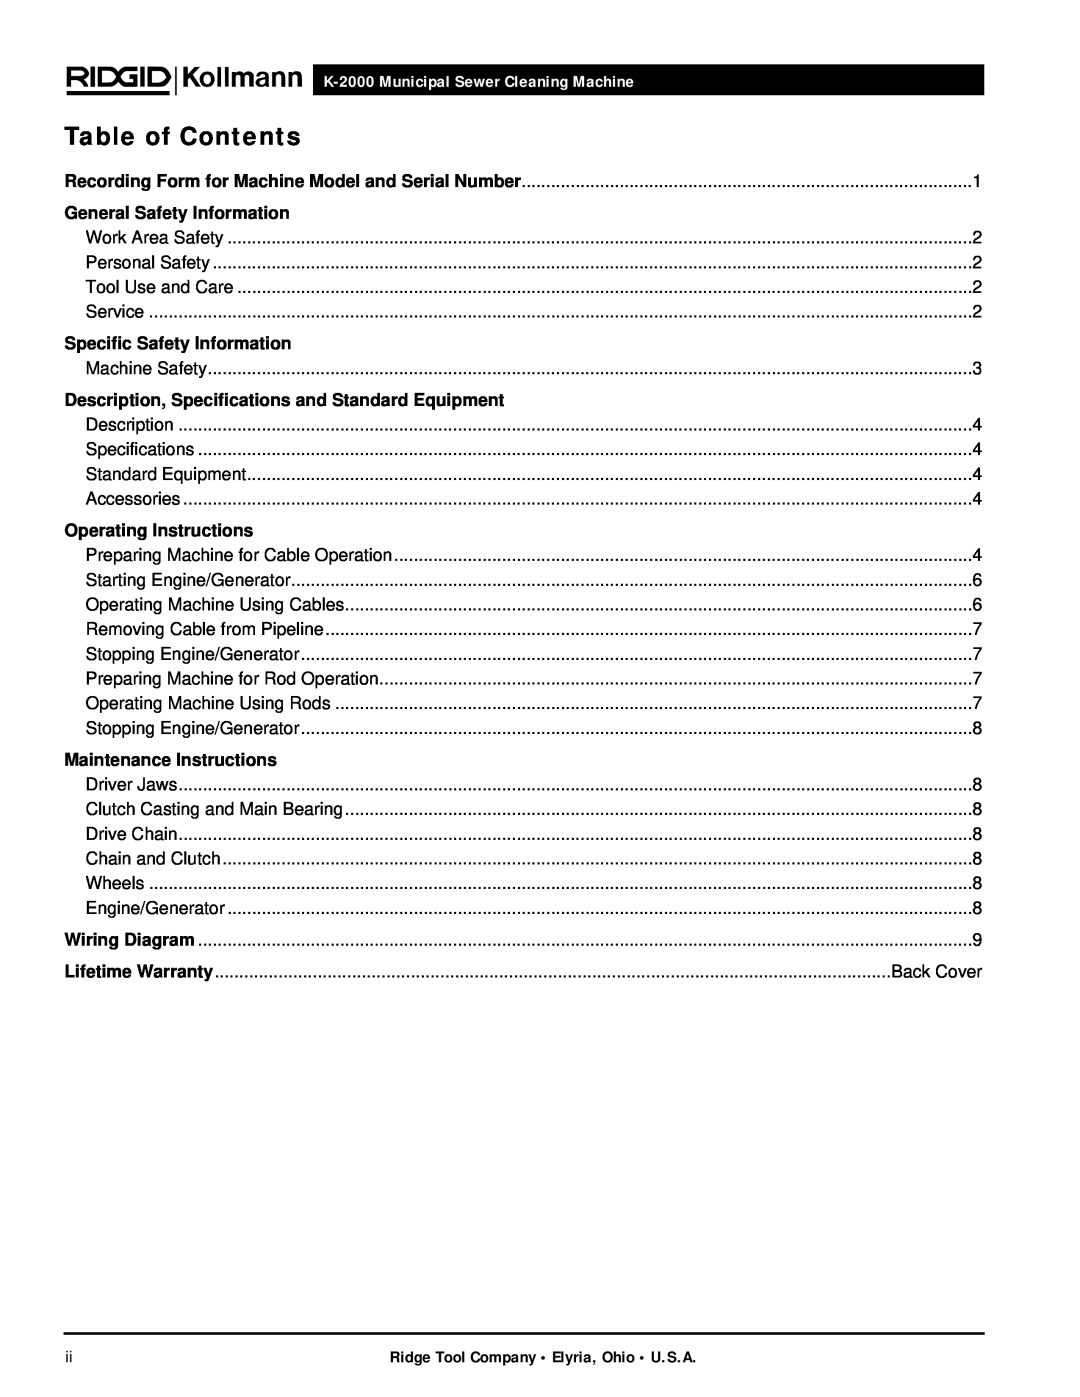 RIDGID manual Table of Contents, K-2000 Municipal Sewer Cleaning Machine, Ridge Tool Company Elyria, Ohio U.S.A 